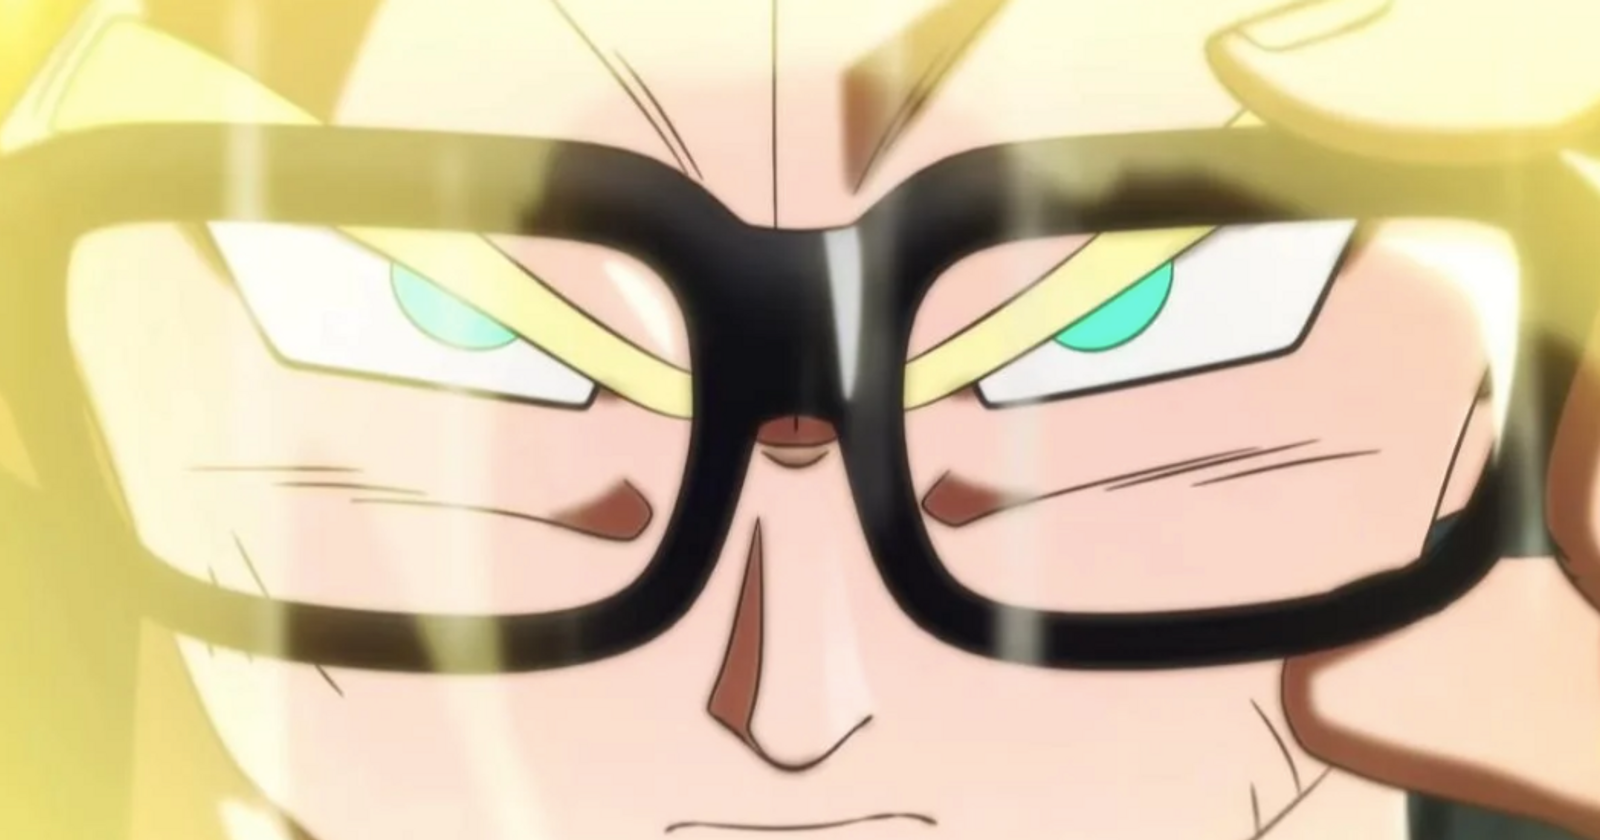 Dragon Ball Super: Super Hero premieres on Crunchyroll this summer - Dexerto